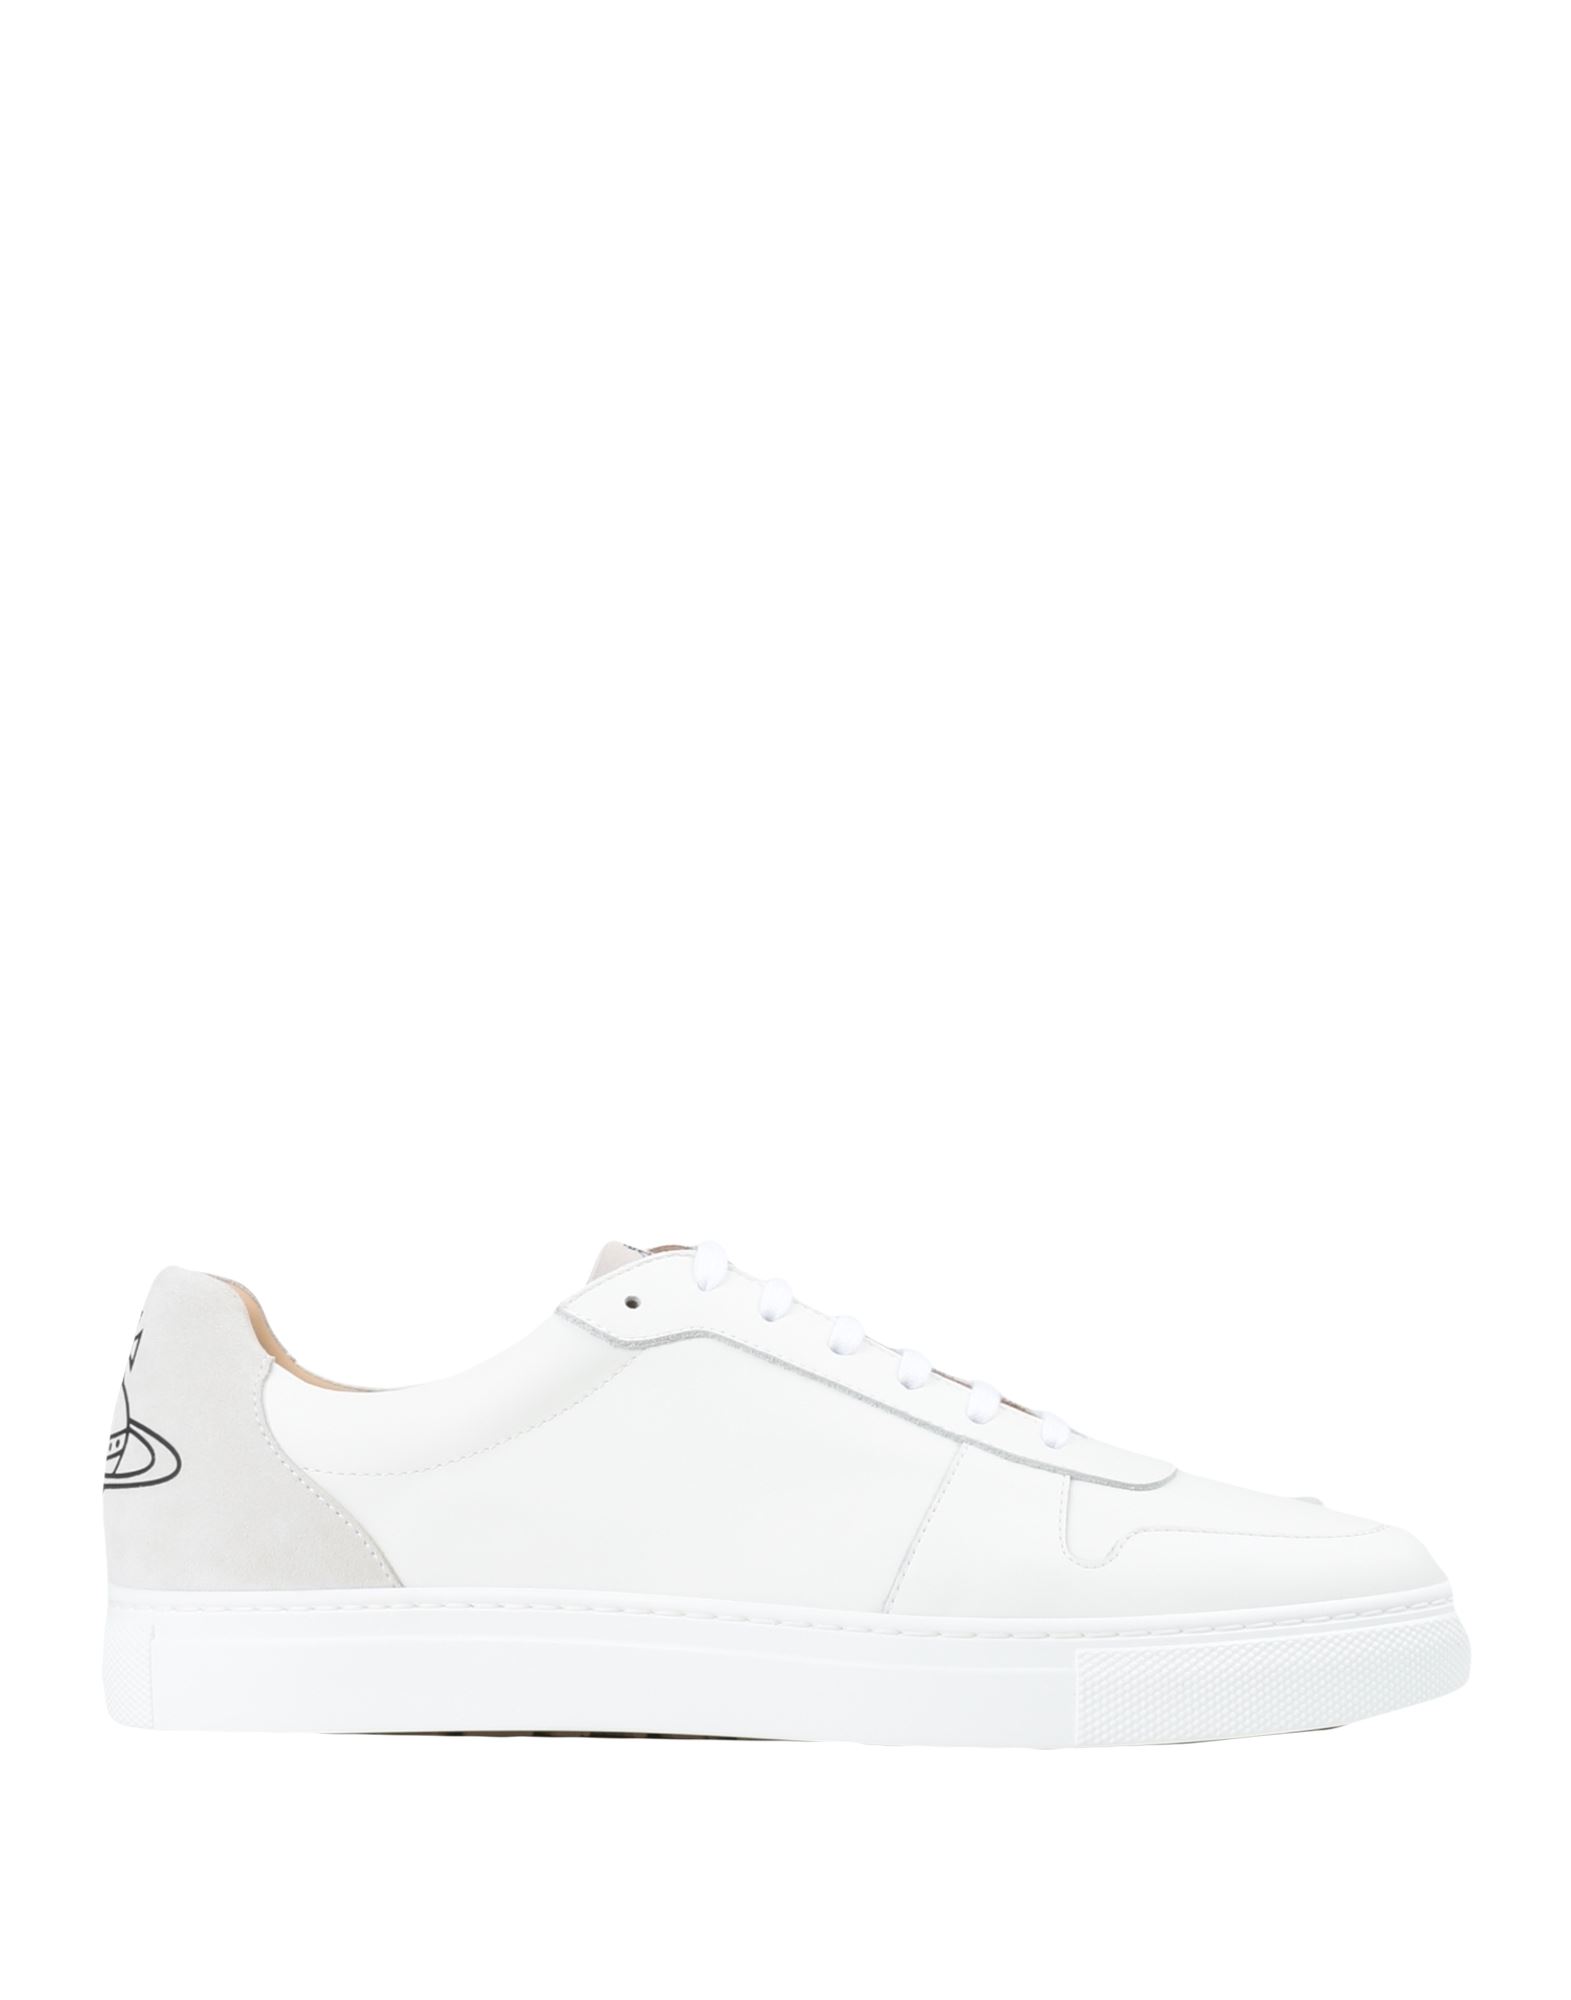 Vivienne Westwood Man Sneakers White Size 11 Calfskin